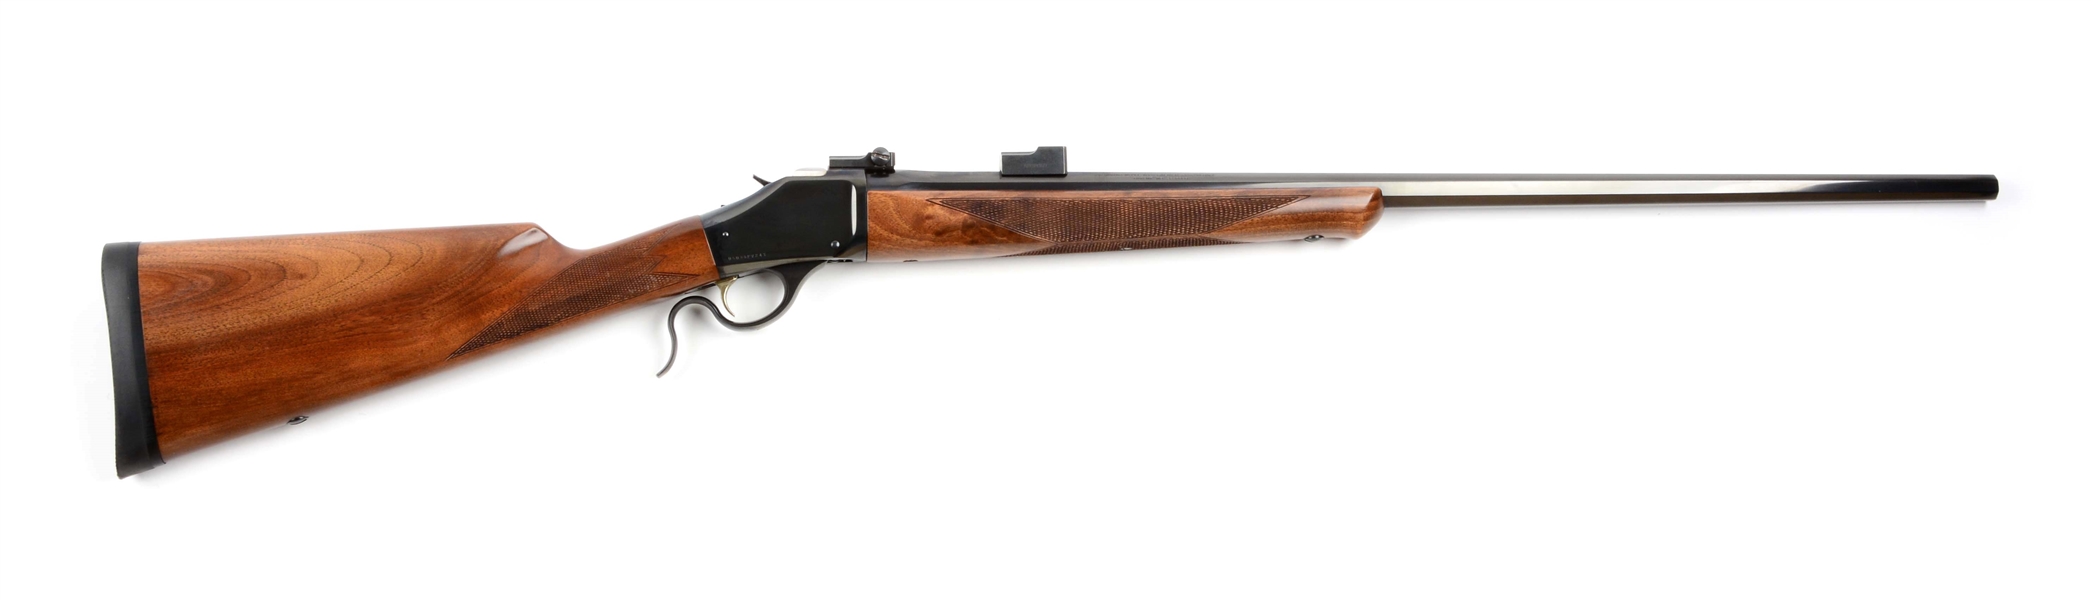 (M) NEAR NEW BROWNING MODEL 1885 SINGLE SHOT RIFLE (HI-WALL).